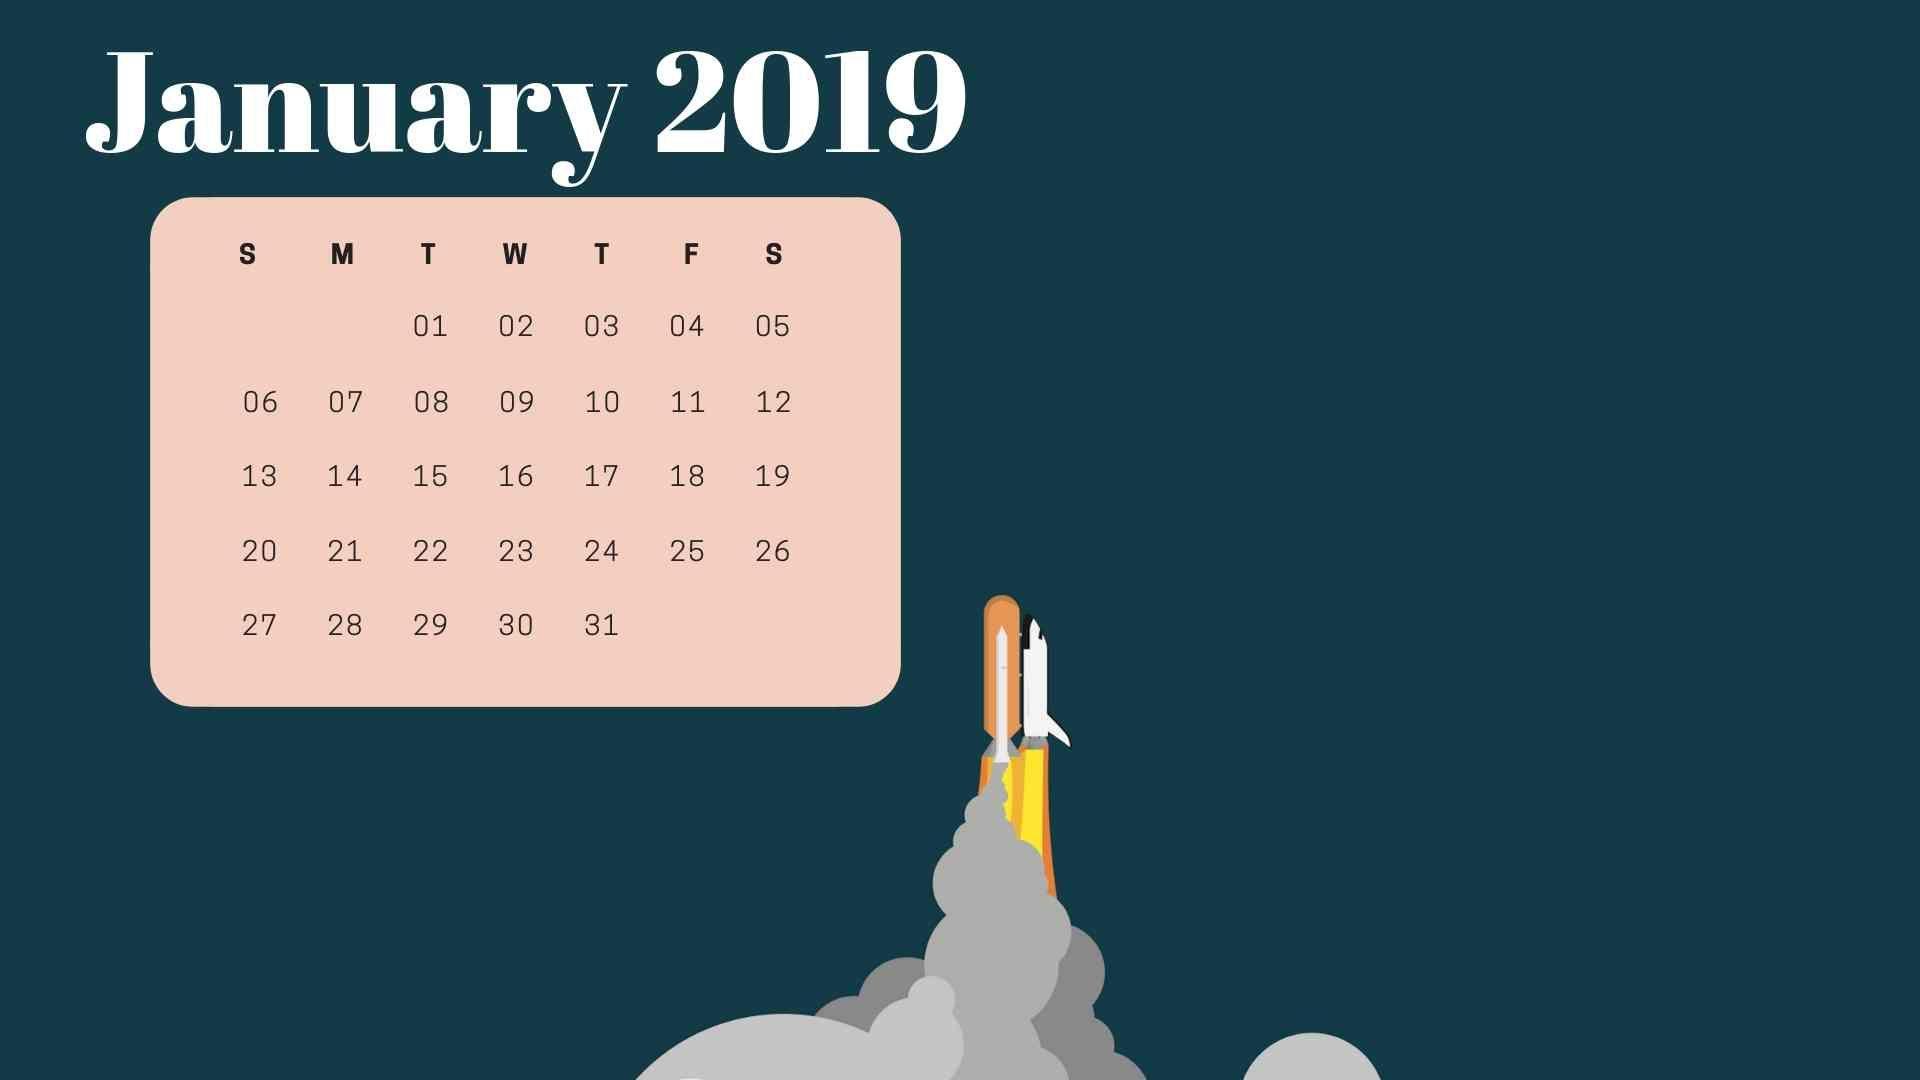 Extraordinary January 2019 Calendar Wallpaper for Your Desktop